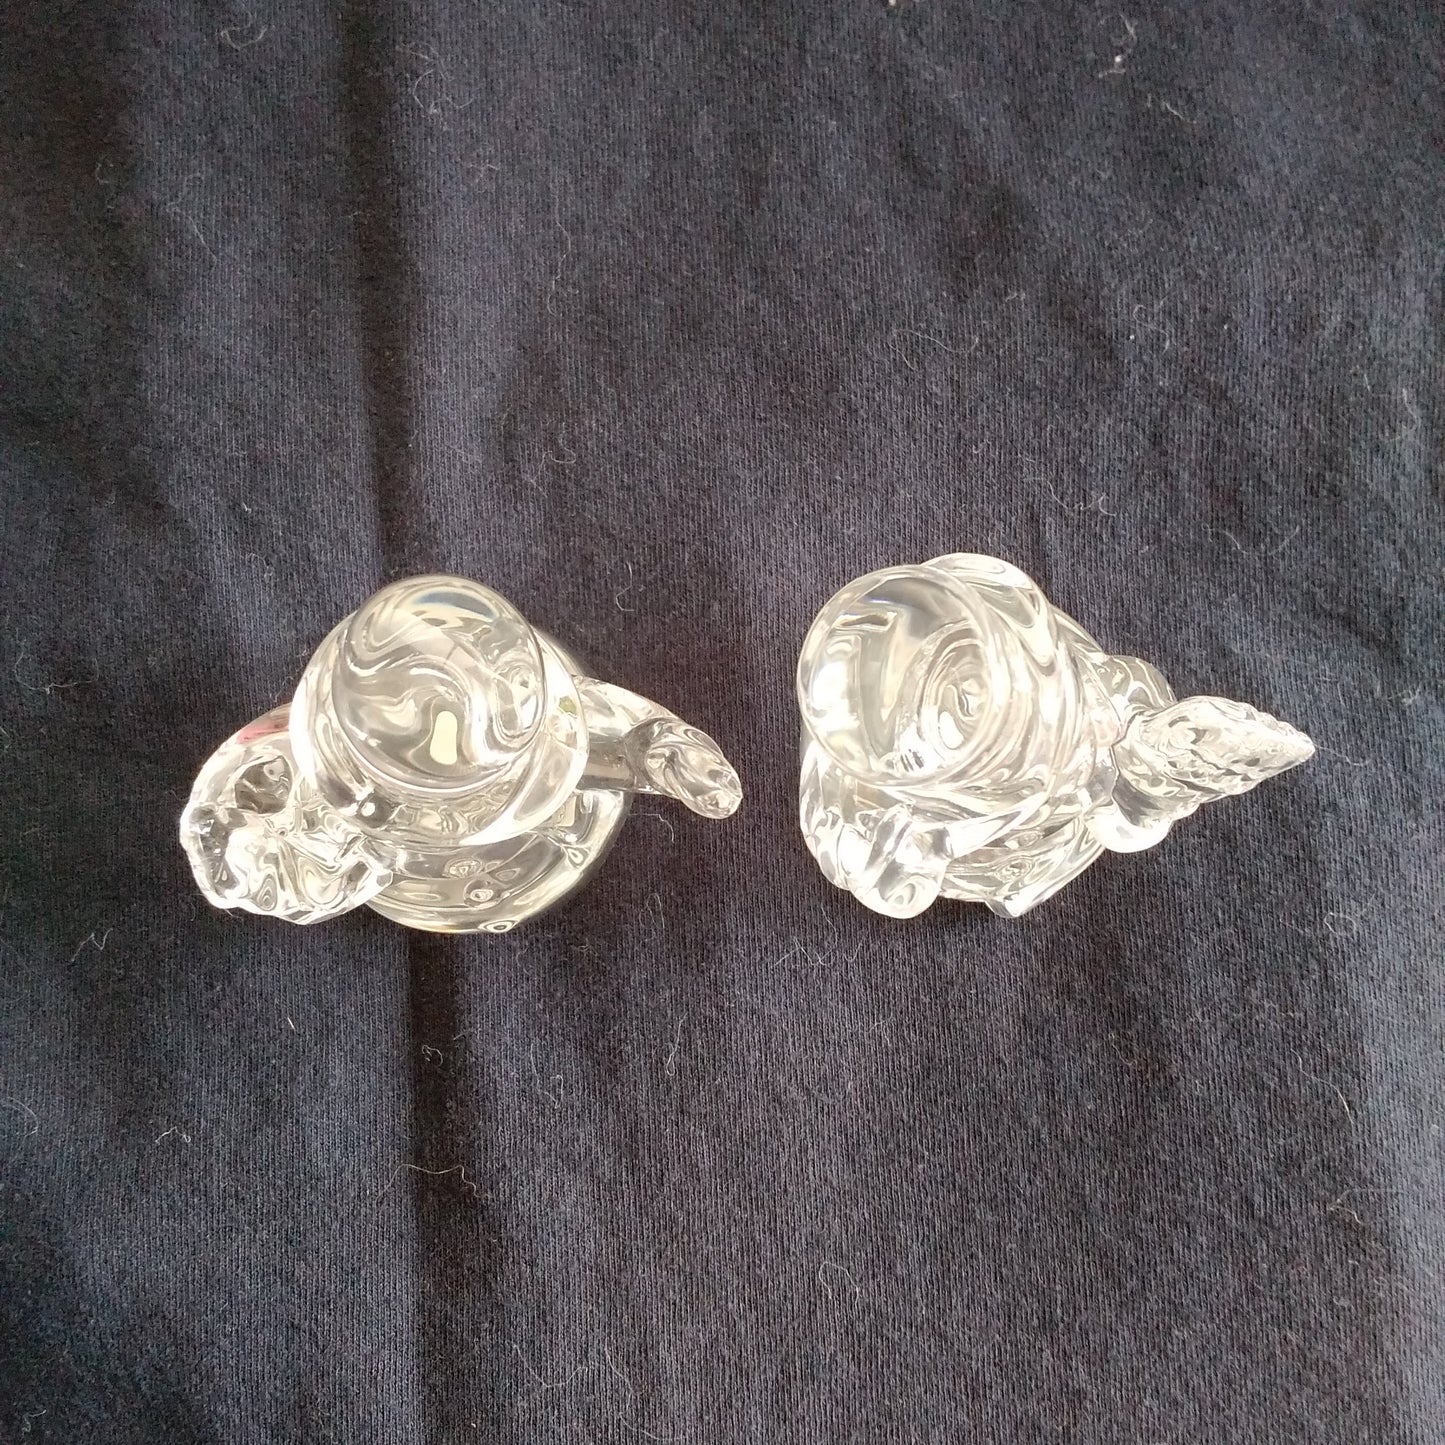 Set of 2 Lenox Crystal 3.5" Snowmen Figurines/Ornaments